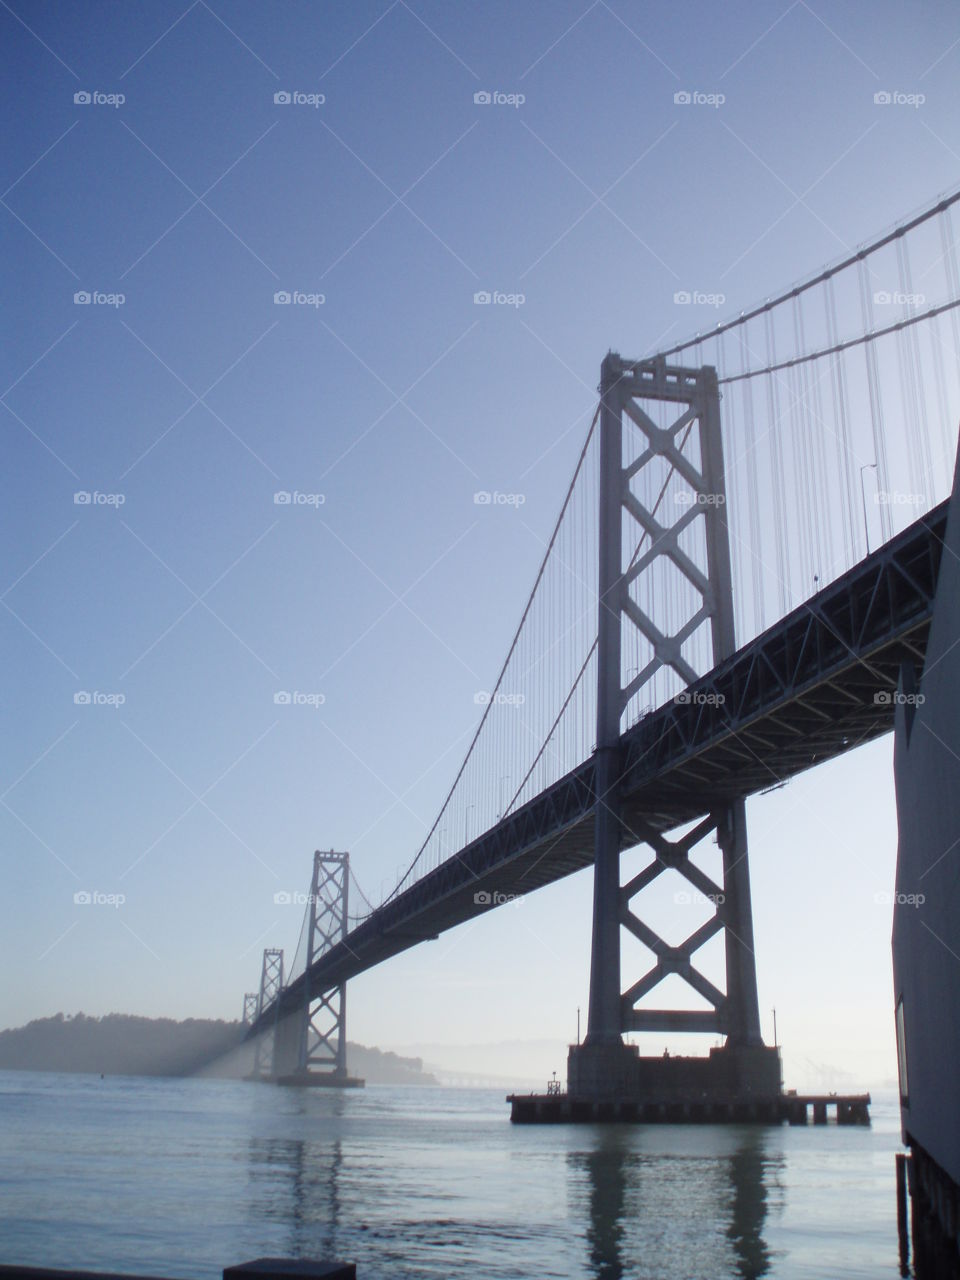 Oakland San Francisco Bay Bridge by the water